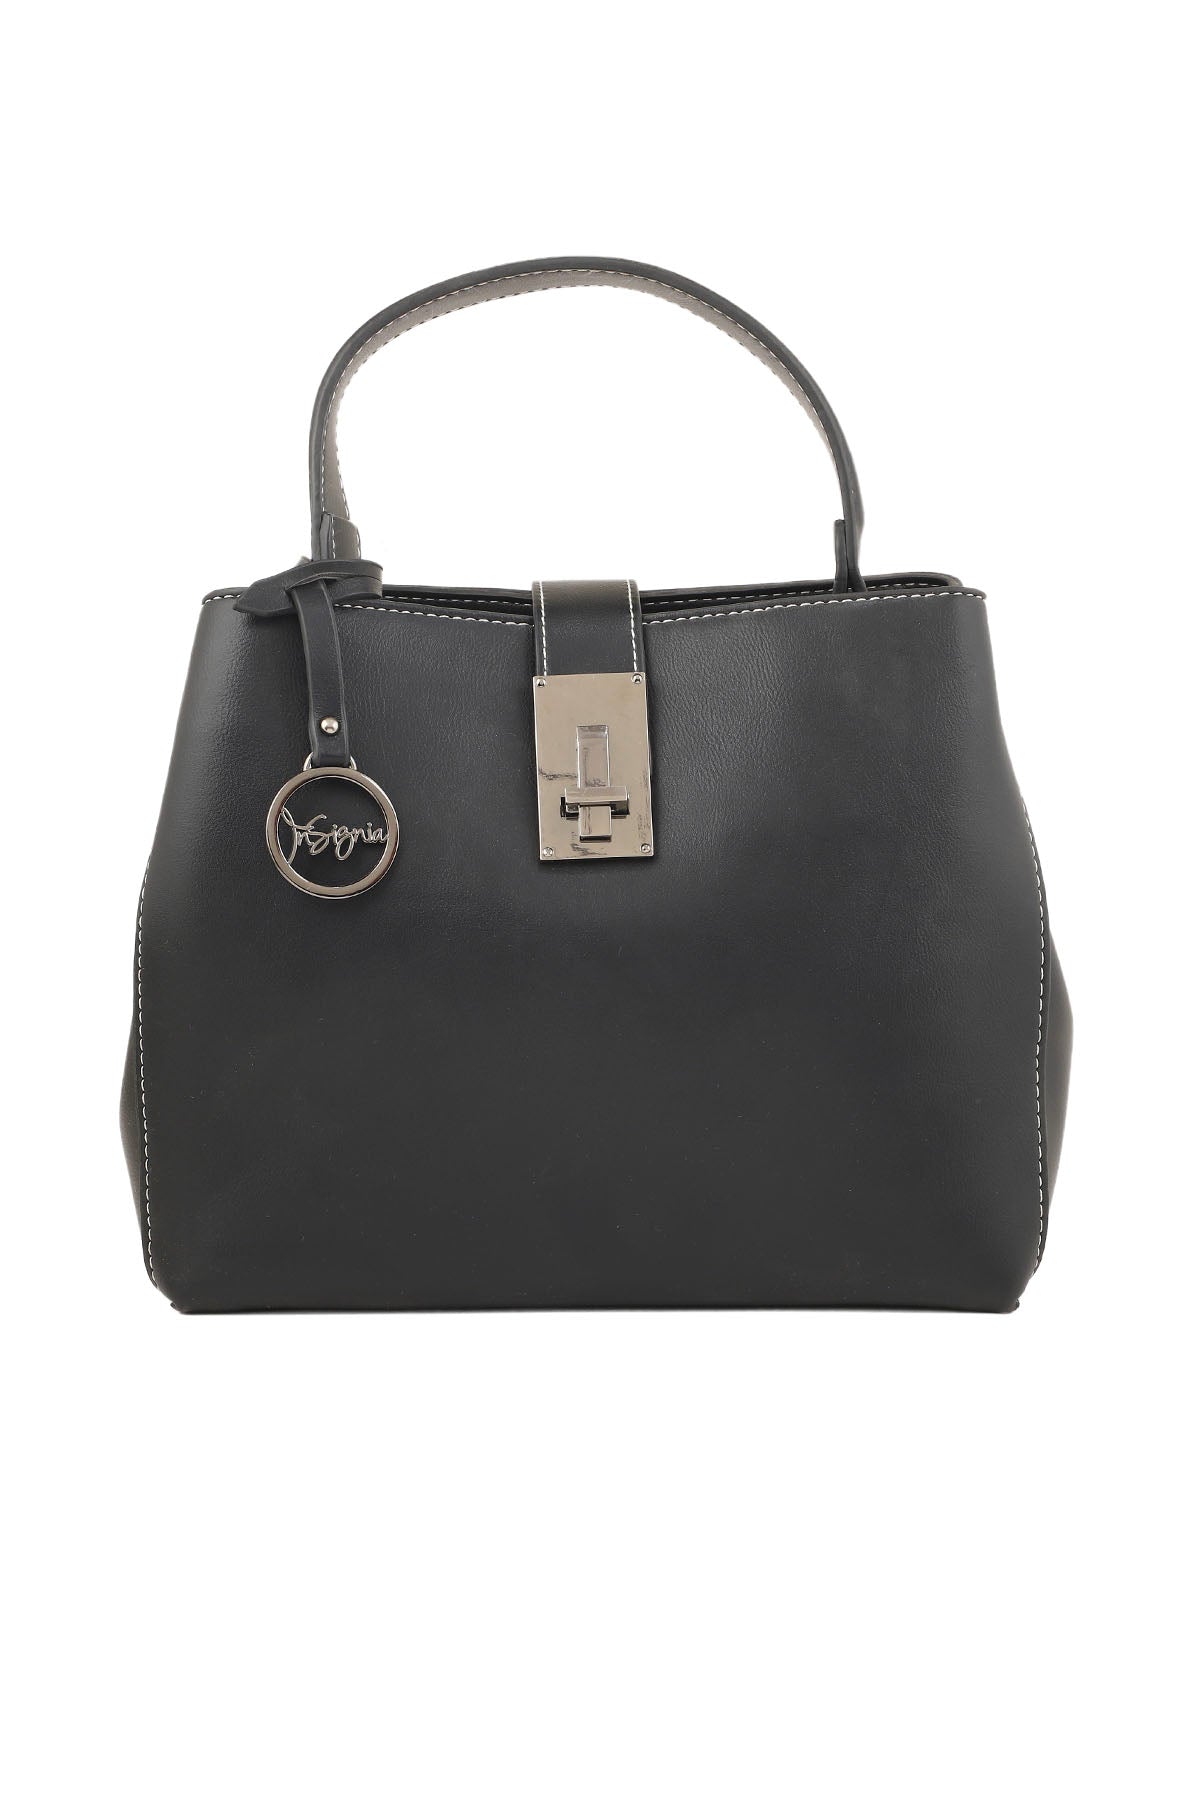 Top Handle Hand Bags B14794-Black